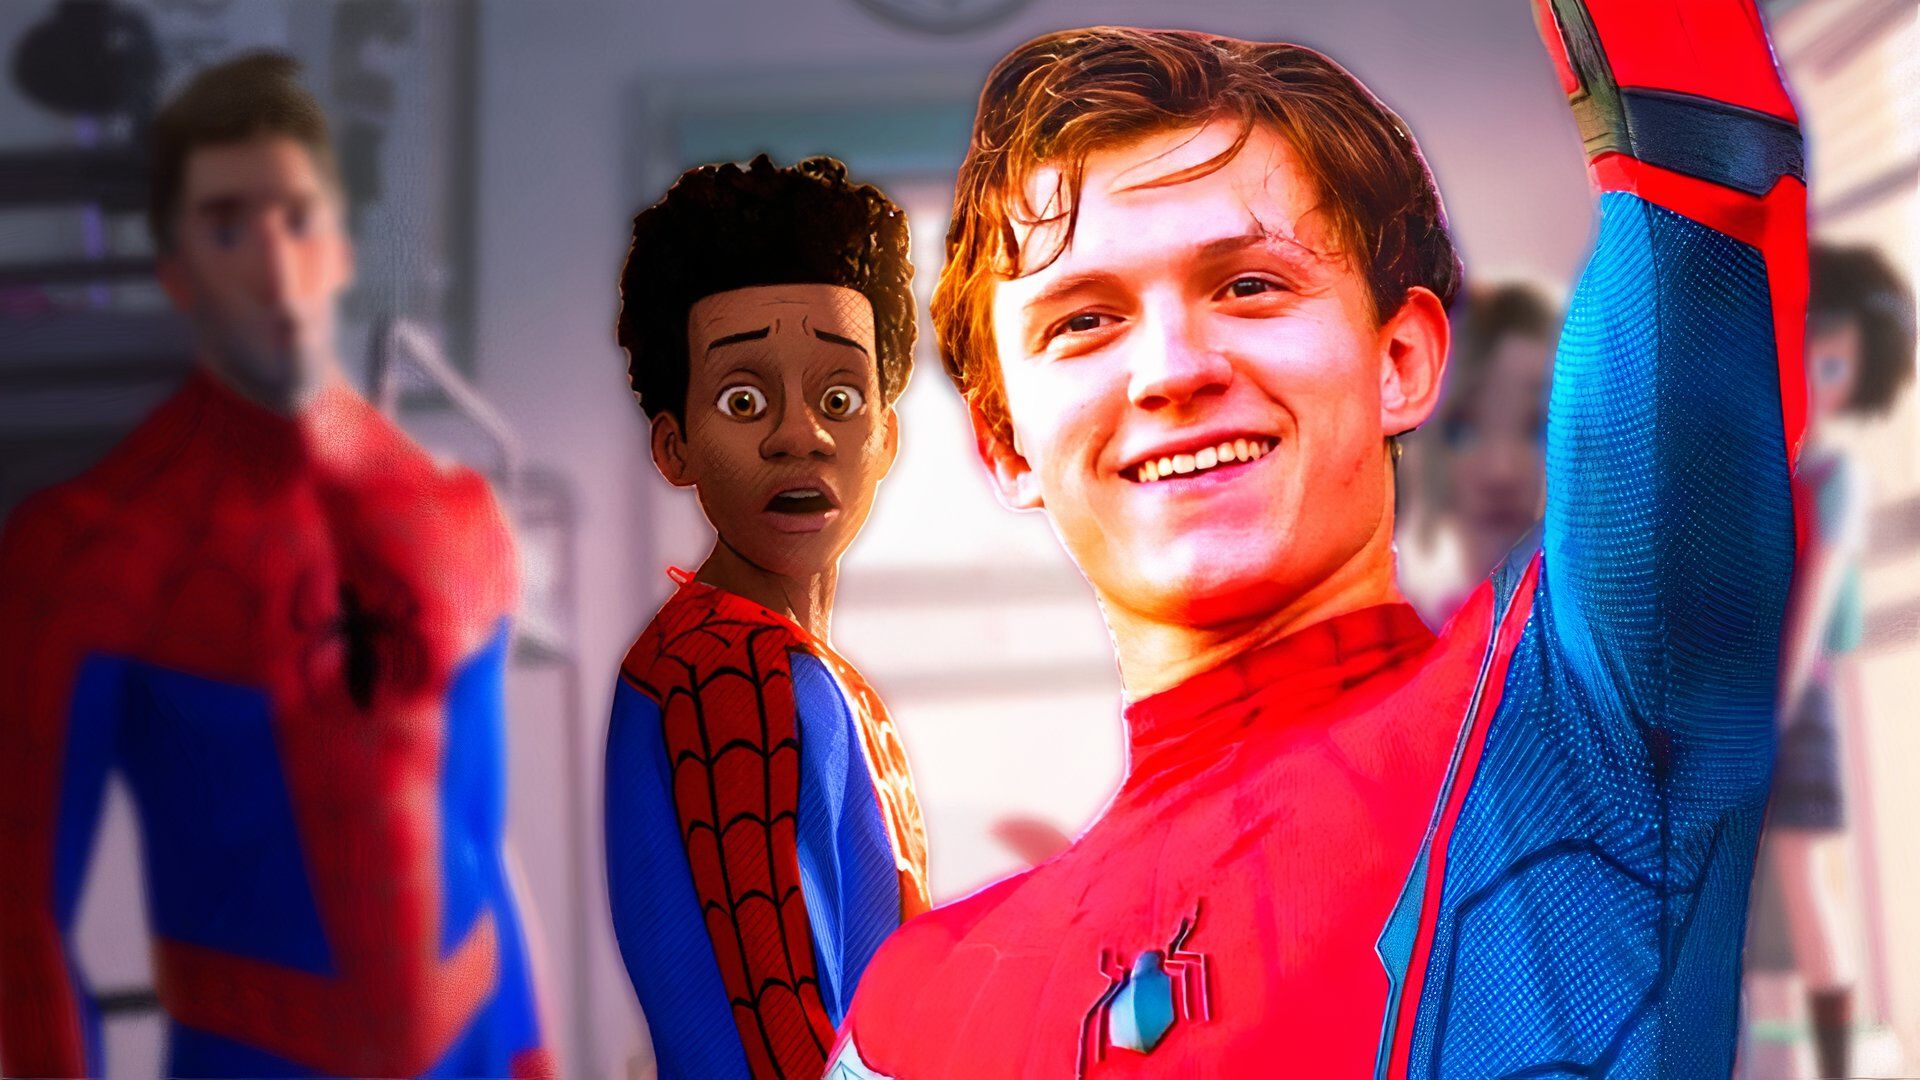 Tom Holland as Spider-Man and Spider-Verse scene